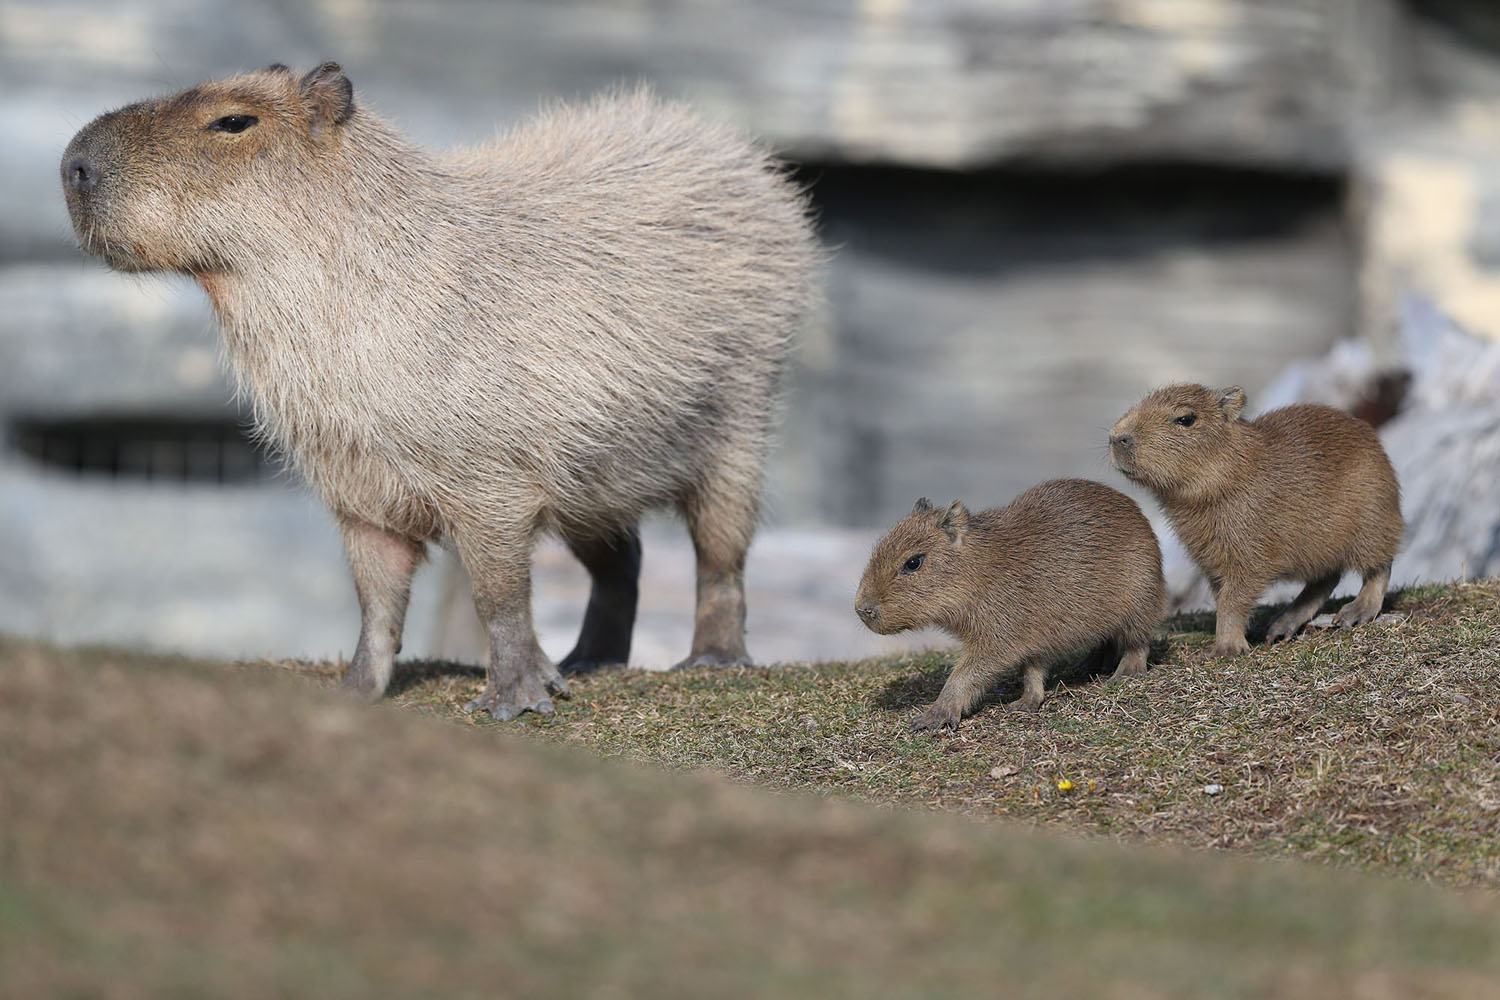 Capybara, Animals